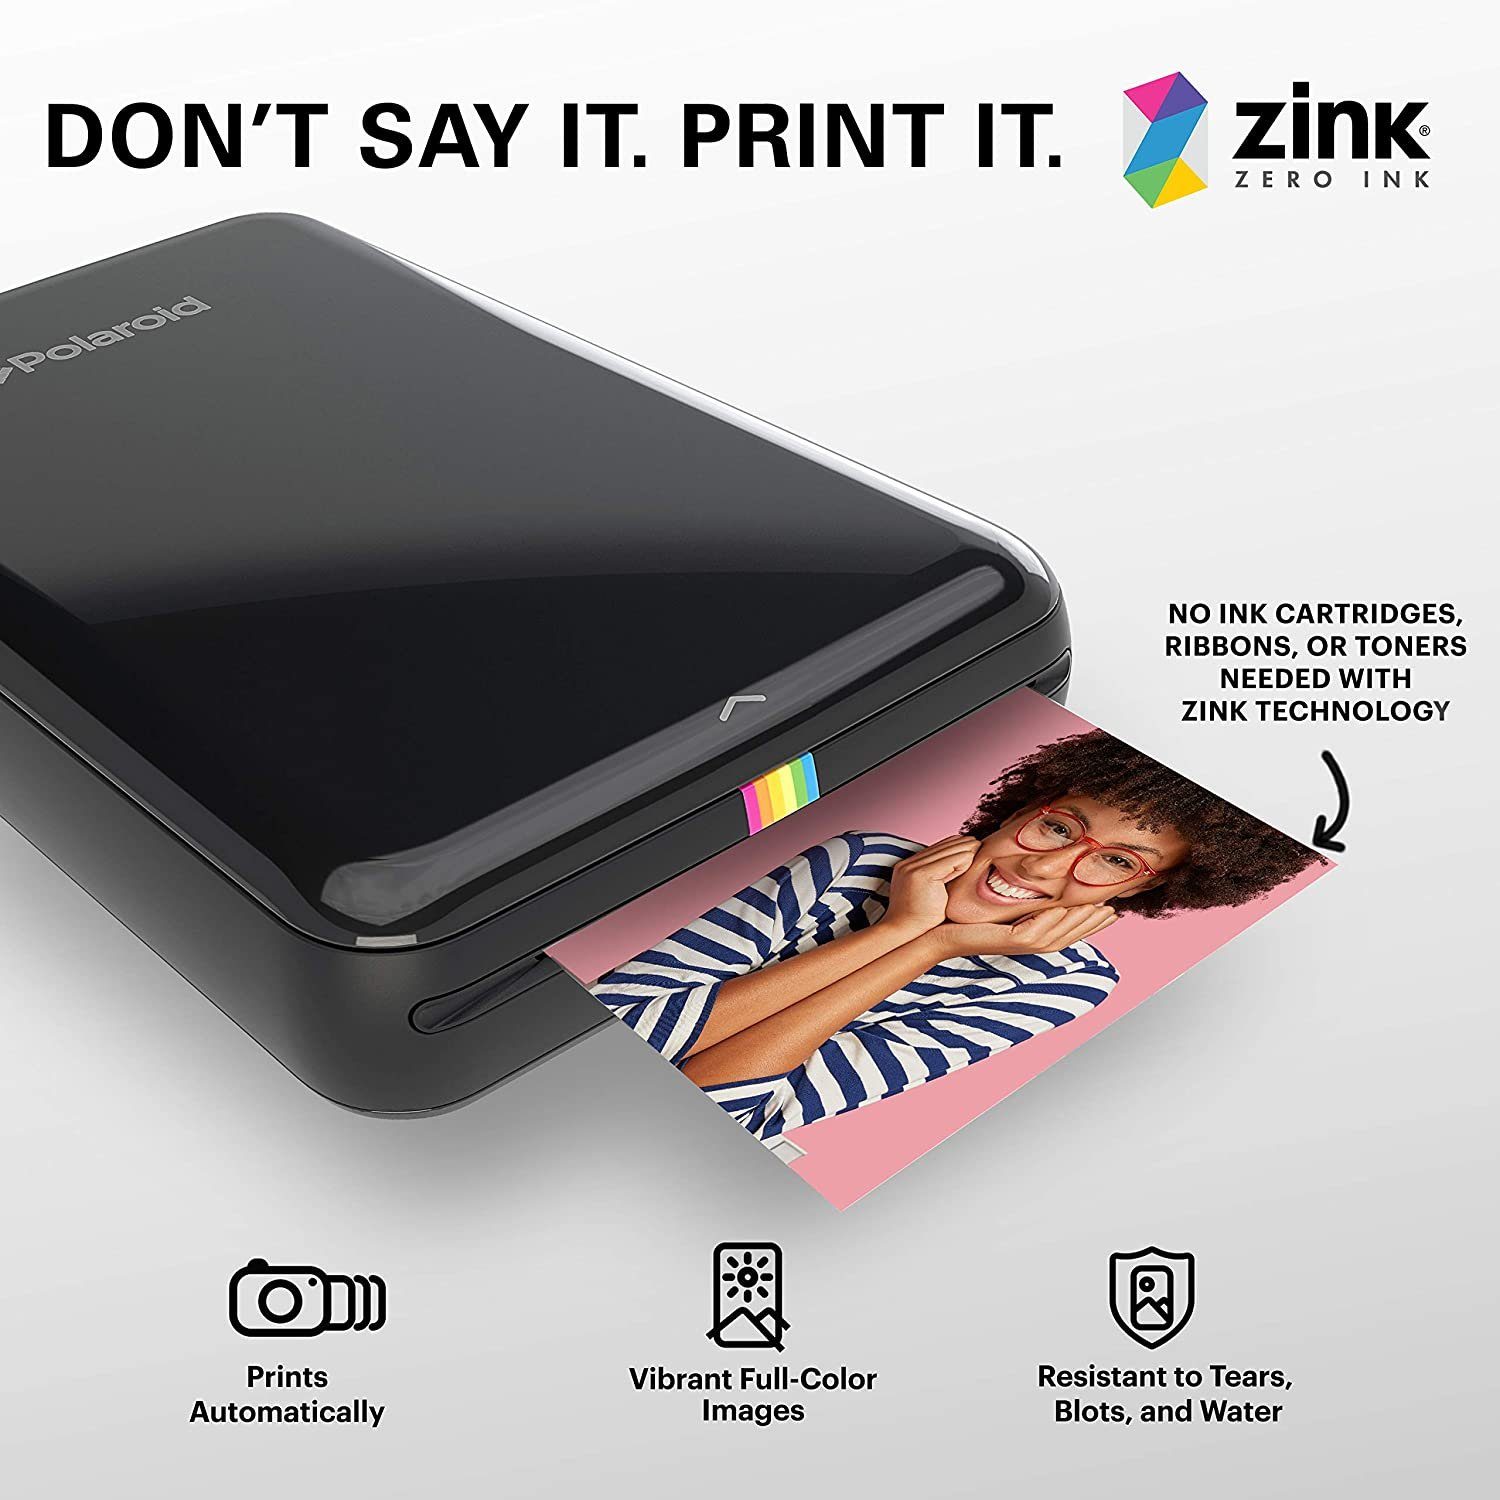 Fotopapier kompatibel Zink Snap, Pack), Foto 2x3" Snap Premium Papier mit Polaroid Zip Touch, (50